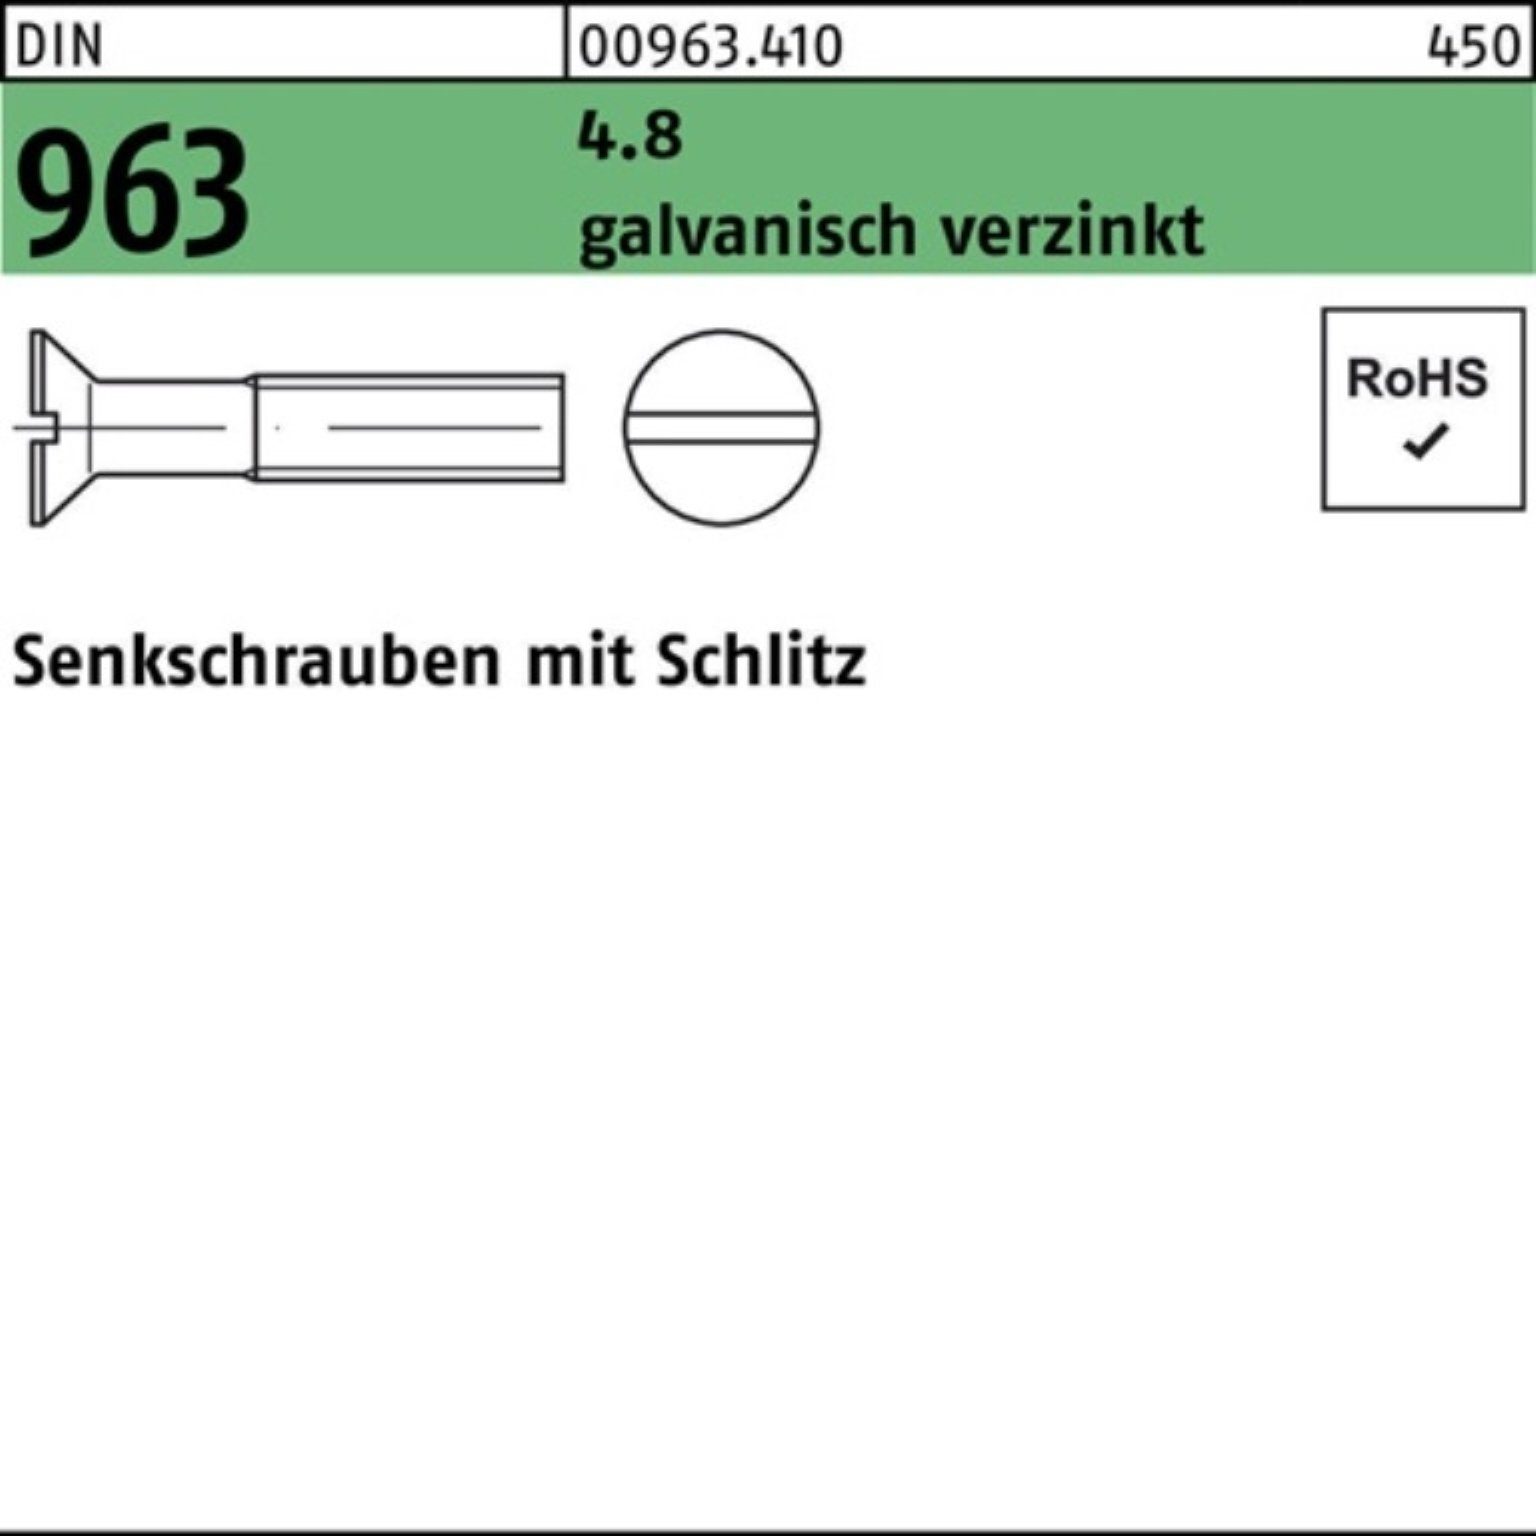 Pack 45 galv.verz. 963 Senkschraube Reyher Schlitz 500er Senkschraube 500 4.8 Stü M6x DIN